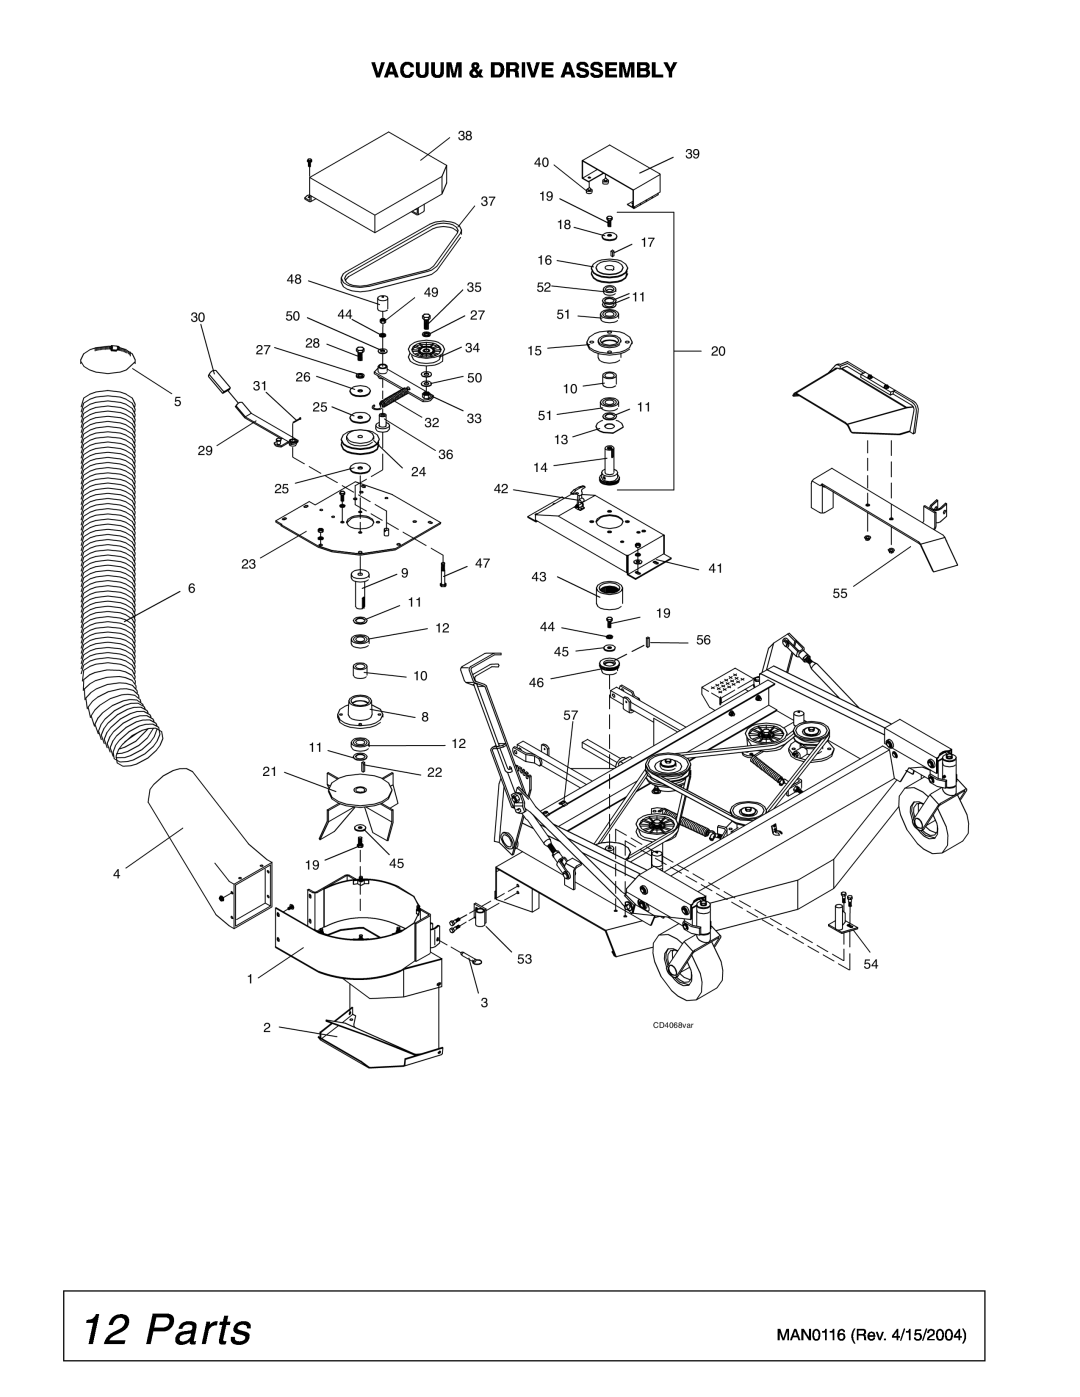 Woods Equipment D5221T, D6121T manual Parts, Vacuum & Drive Assembly 